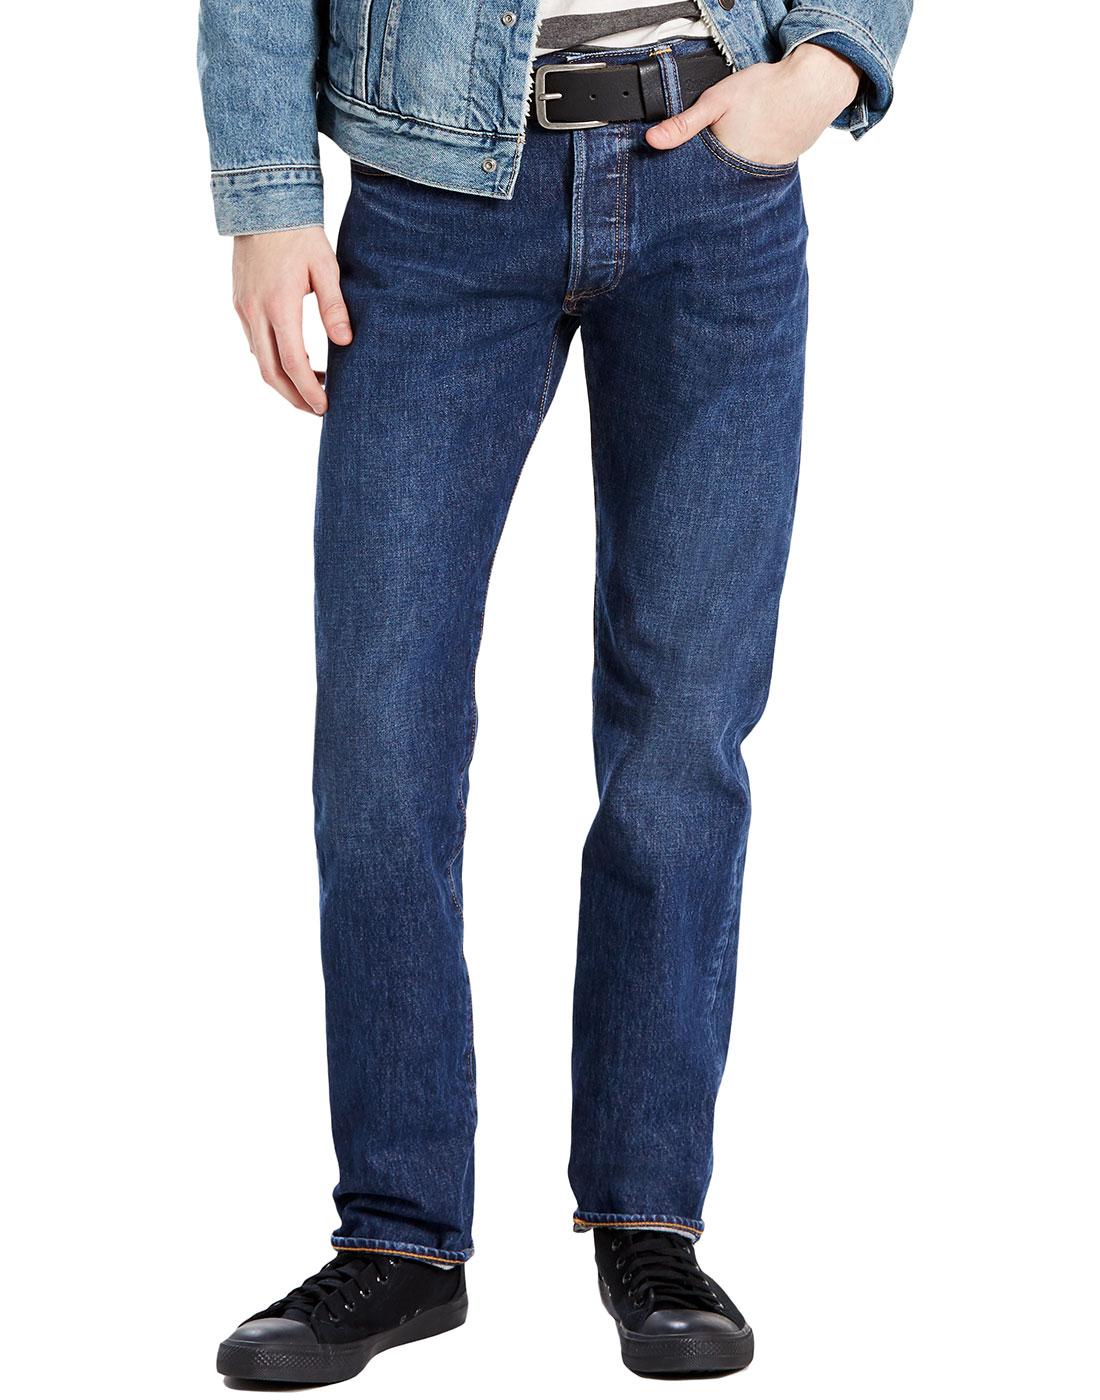 LEVI'S® 501 Retro Mod Original Fit Straight Jeans Subway Station